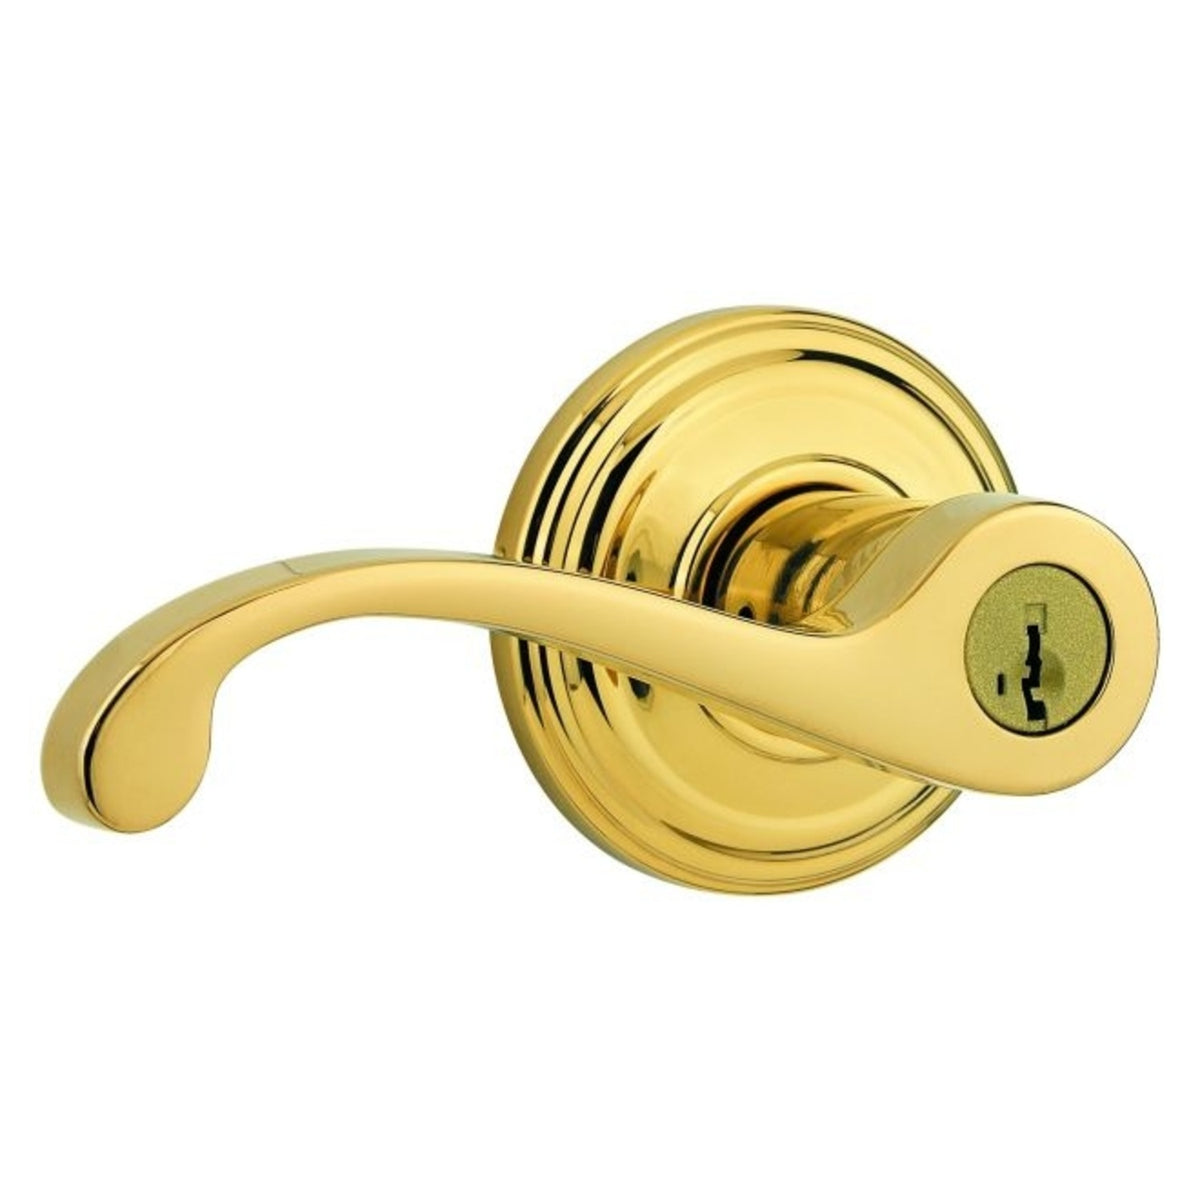 Weiser Lock GCL535CHL3BRS Commonwealth Entry Door Lock, Lifetime Bright Brass